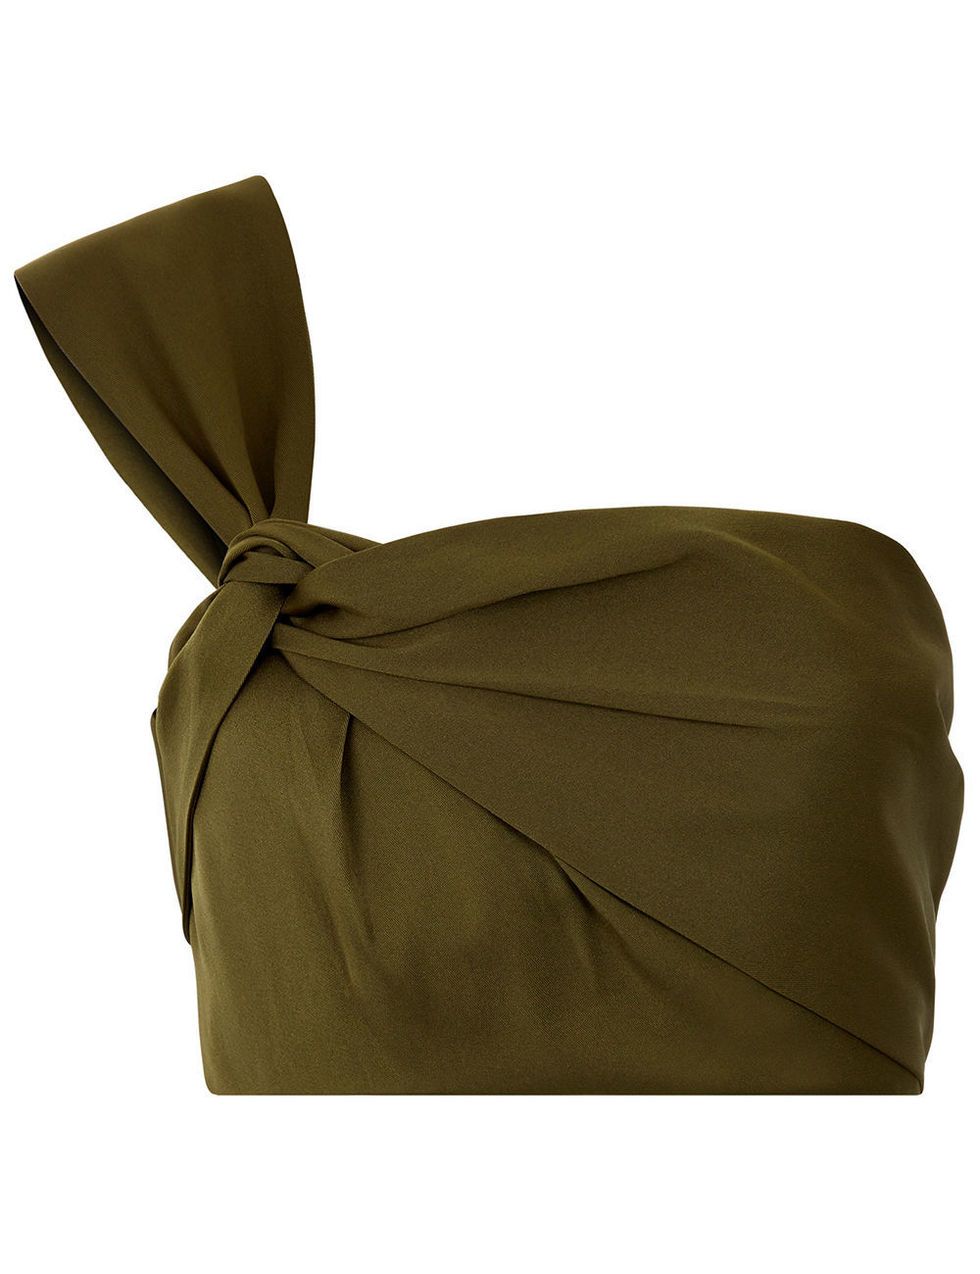 Brown, Khaki, Tan, Beige, Bag, Paper product, Paper bag, Liver, Shoulder bag, Silk, 